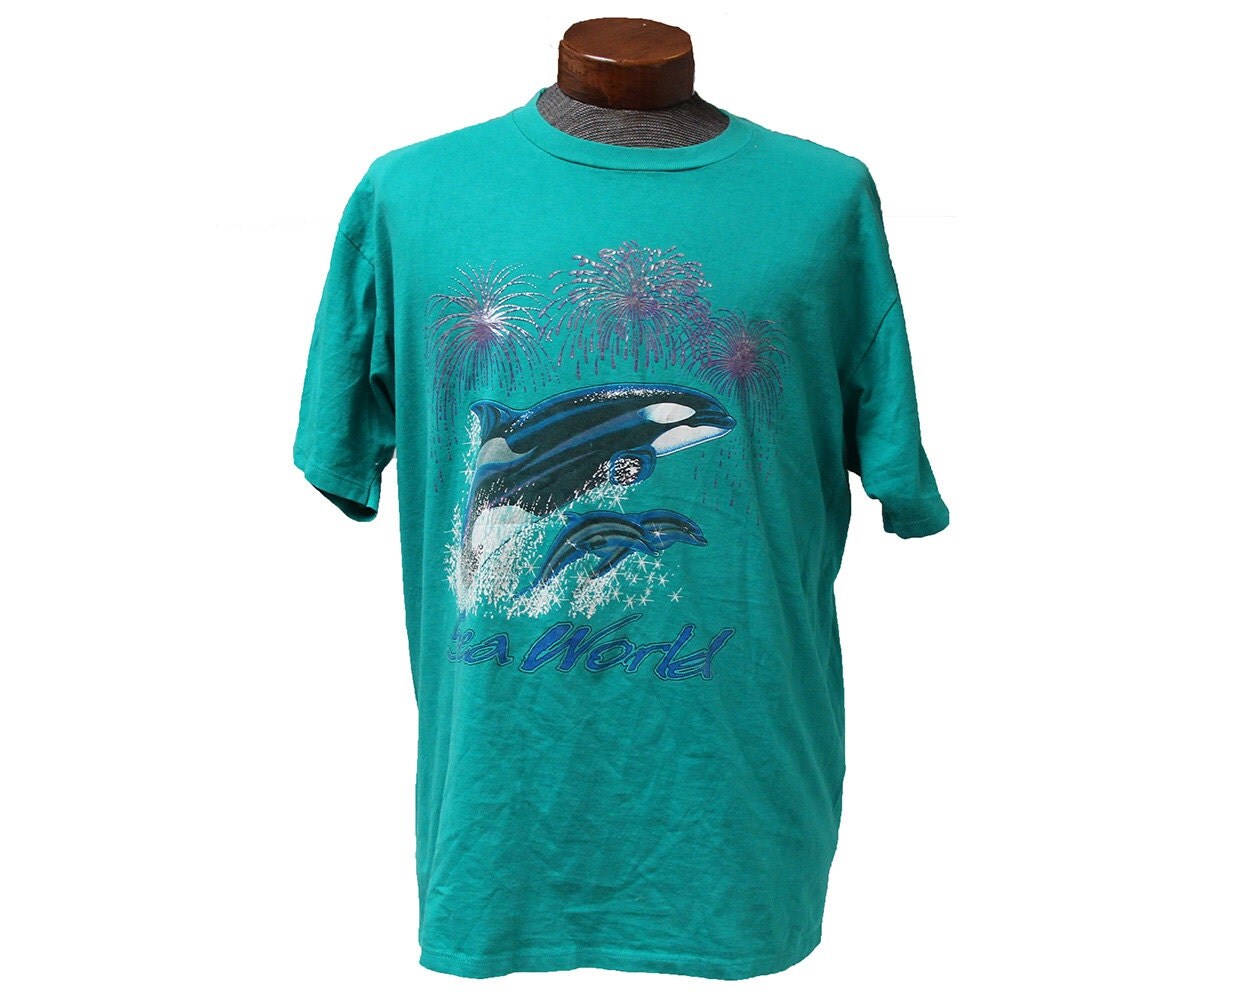 Vintage Sea World T-shirt Teal Orca Killer Whale Shirt Size XL